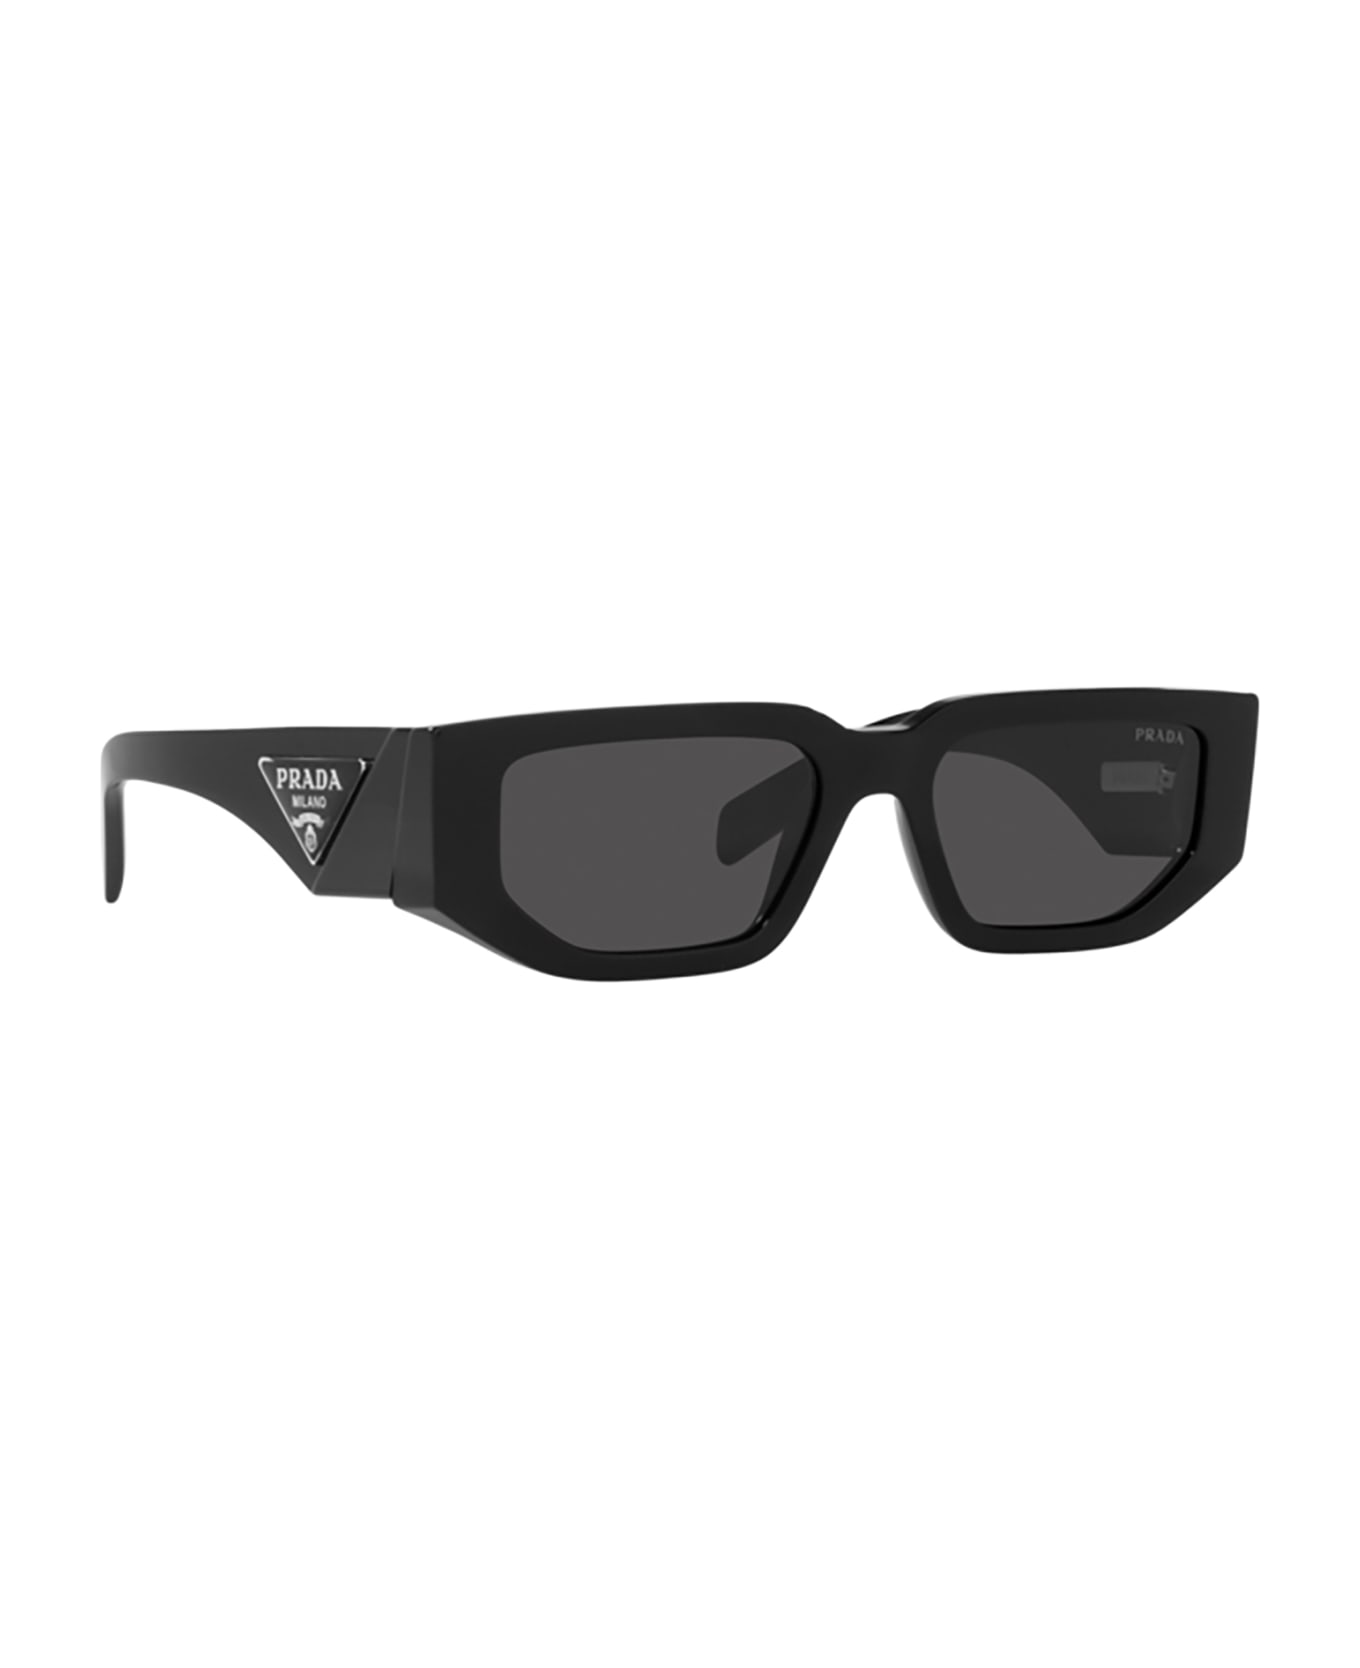 Prada Eyewear Pr 09zs Black Sunglasses - Black サングラス